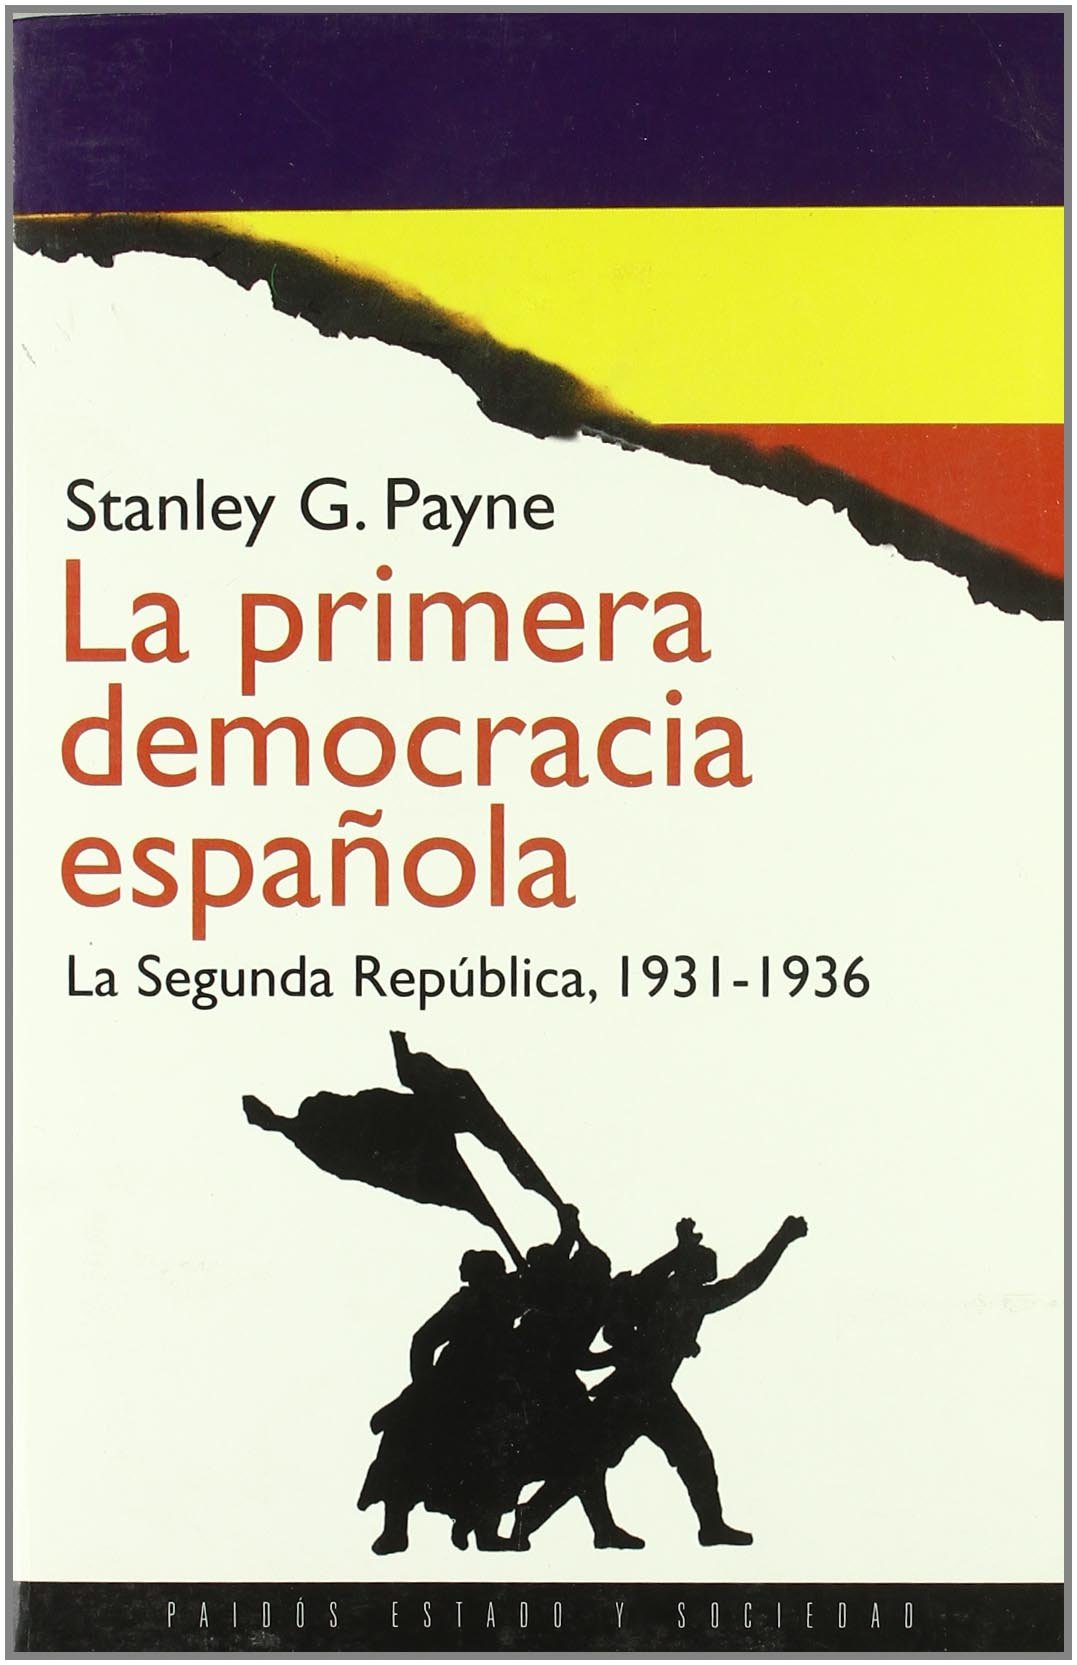 La guerra civil española by Stanley G. Payne